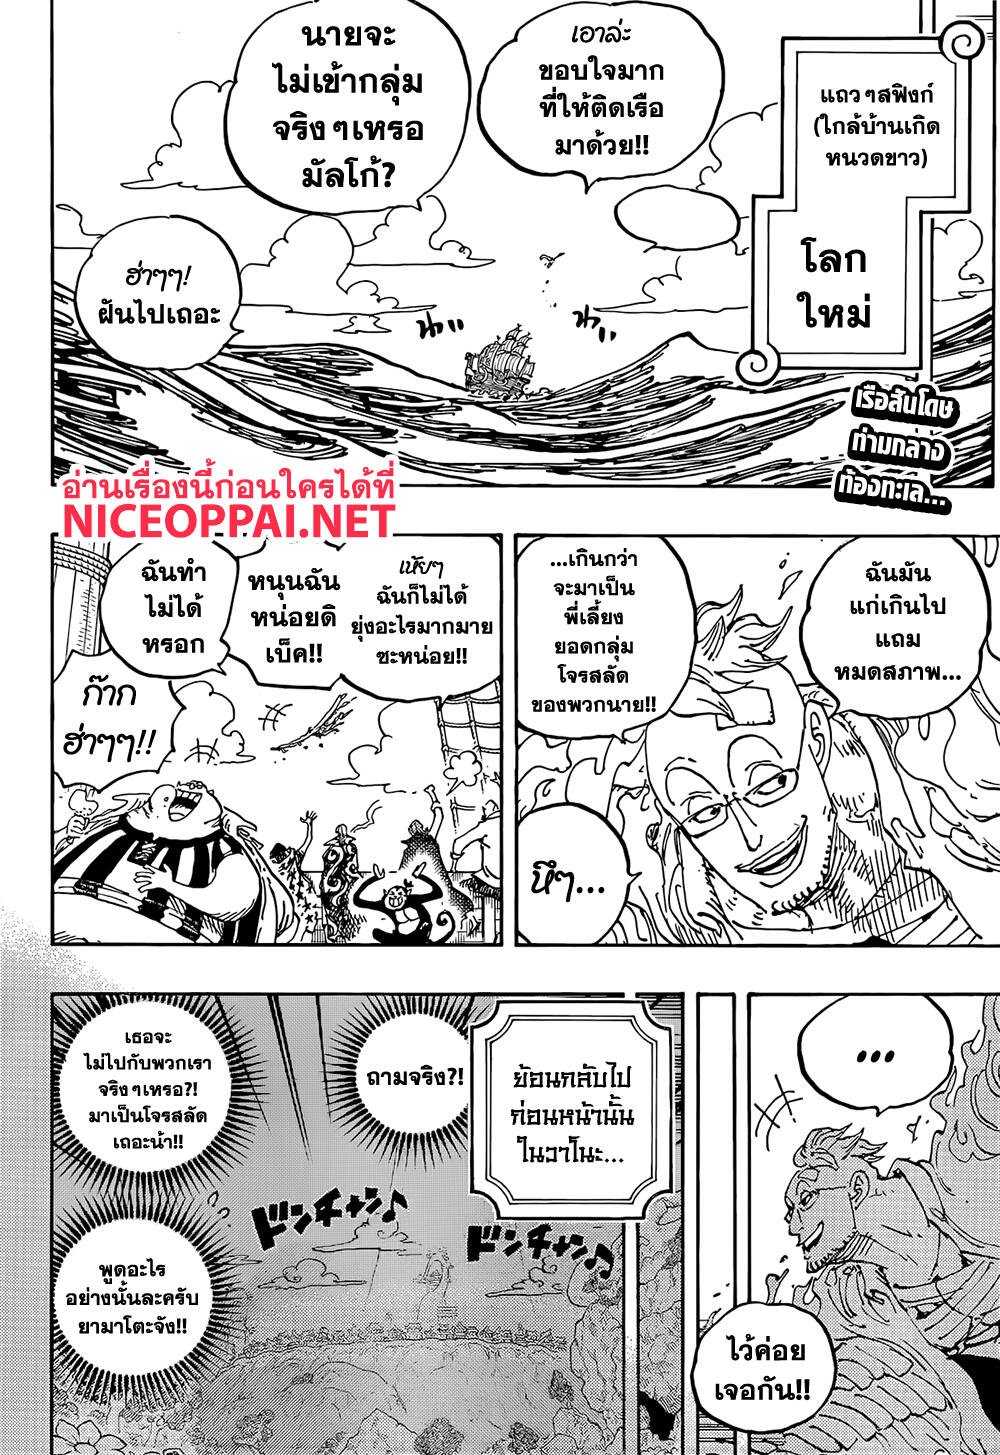 One-Piece-1059-02.jpg